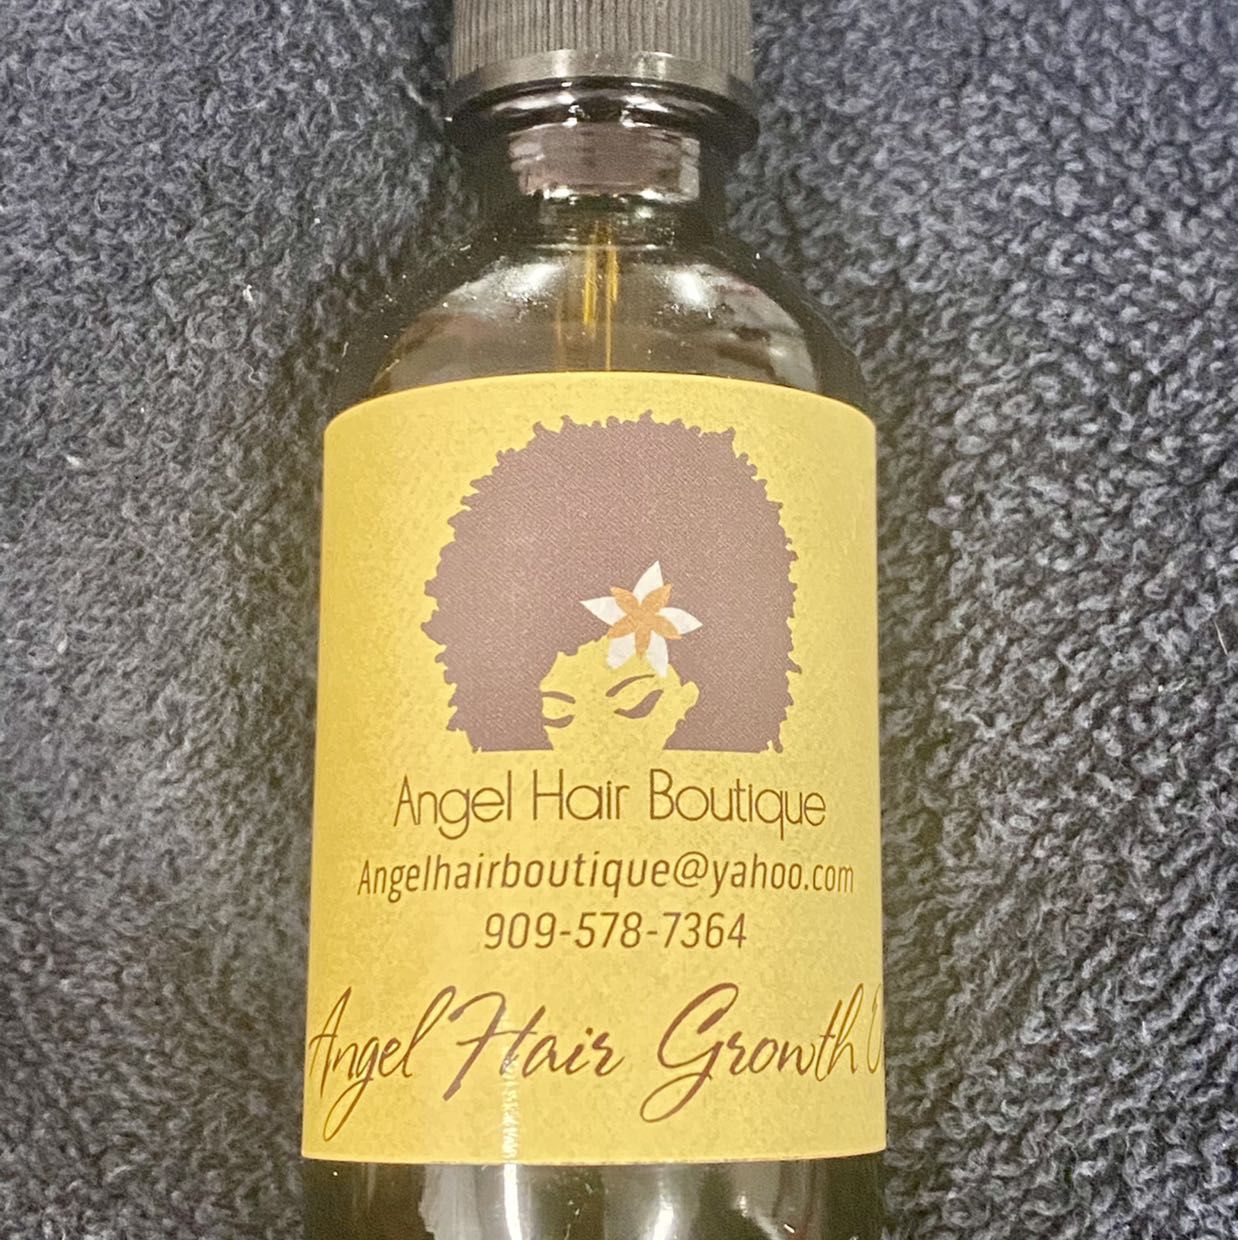 Angel Hair Growth Oil portfolio